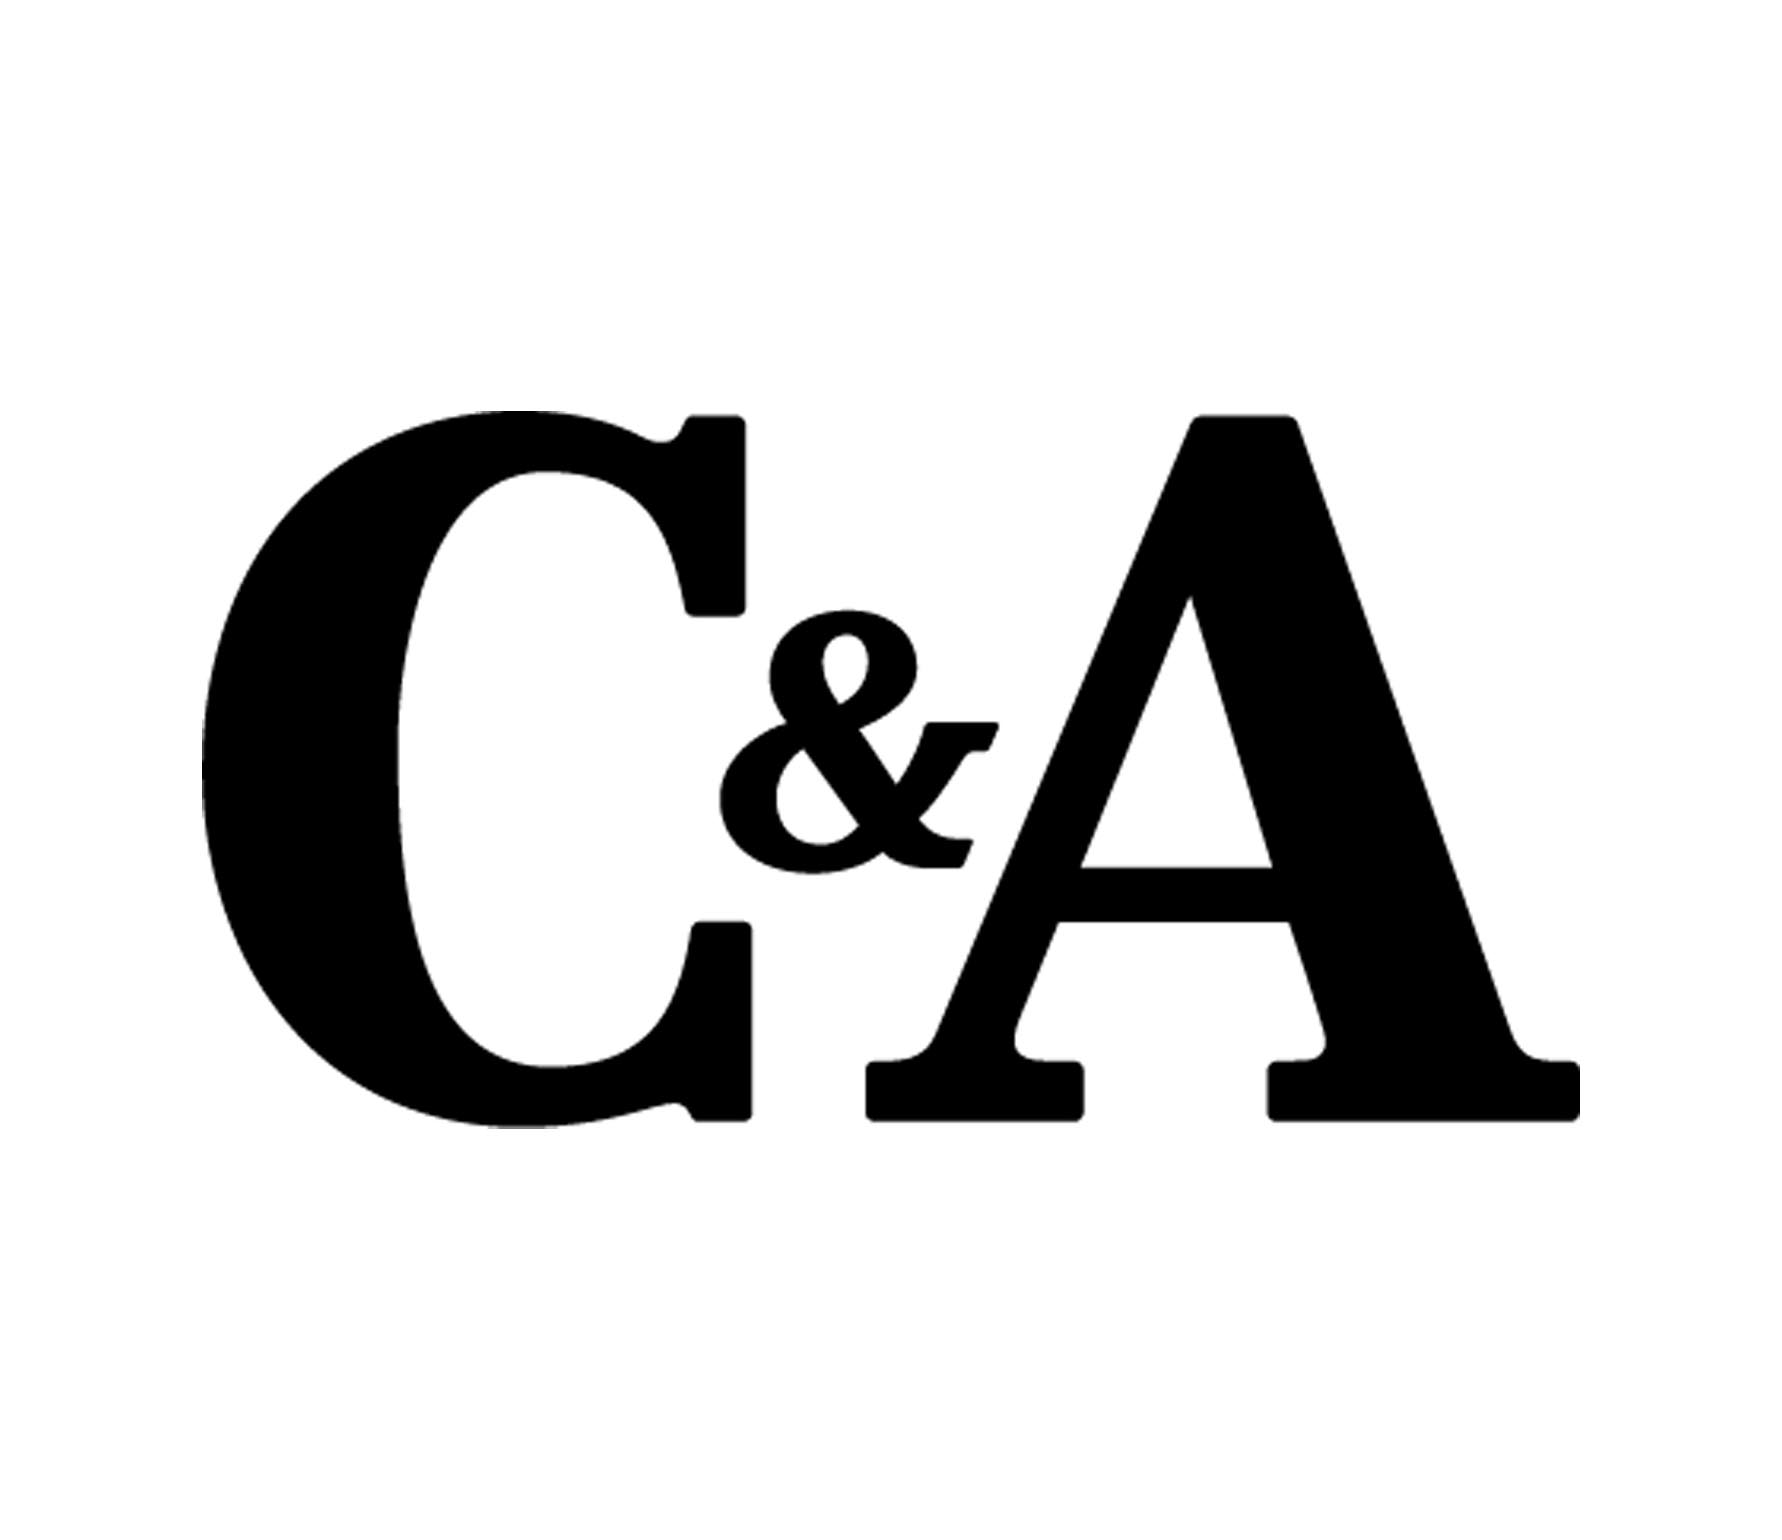 CA2021 Logo